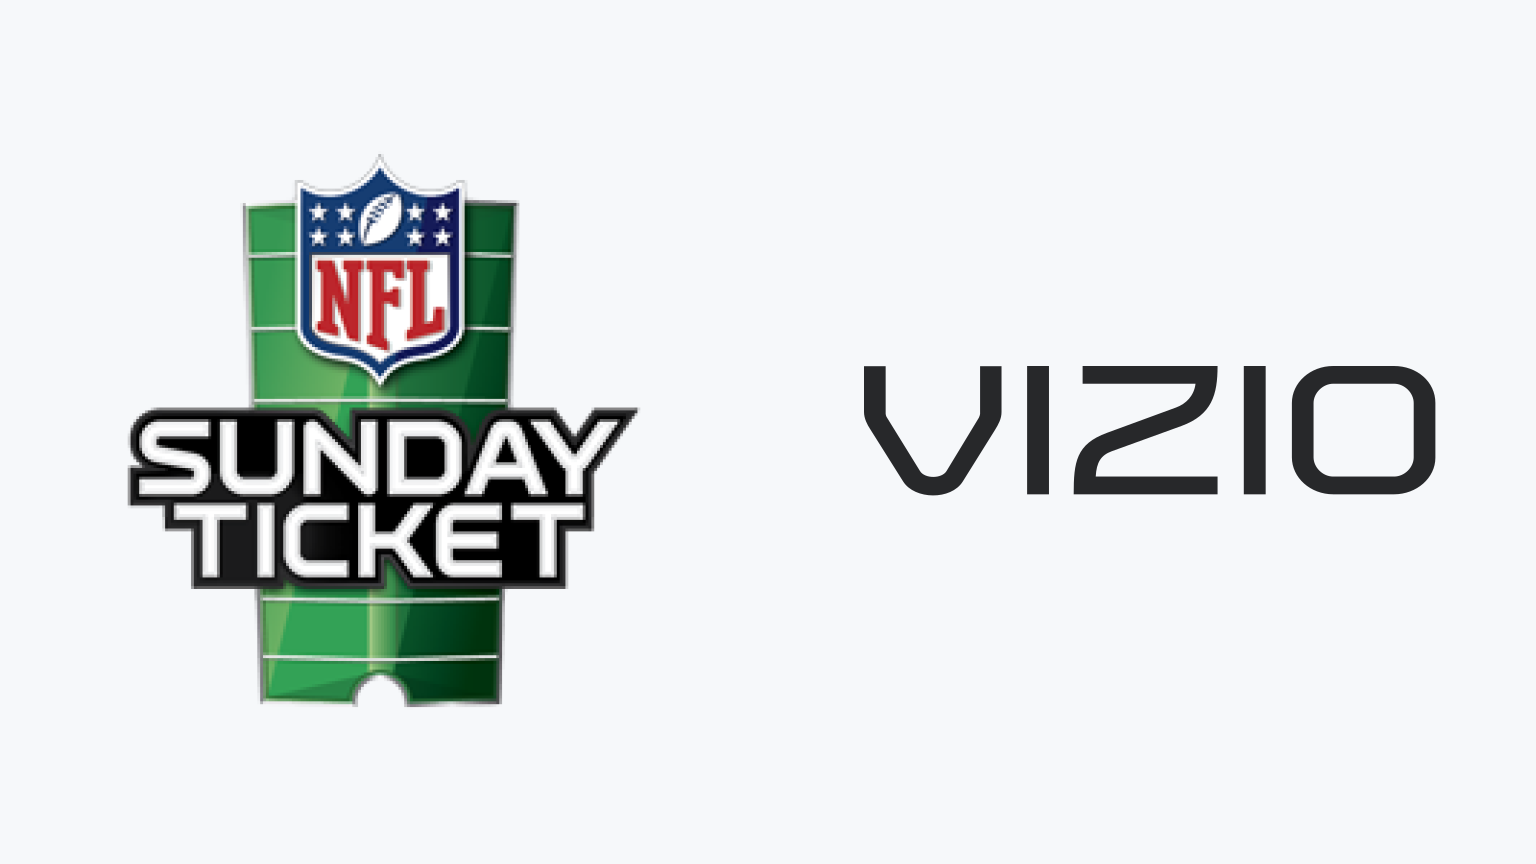 How to Watch NFL Sunday Ticket on VIZIO Smart TV